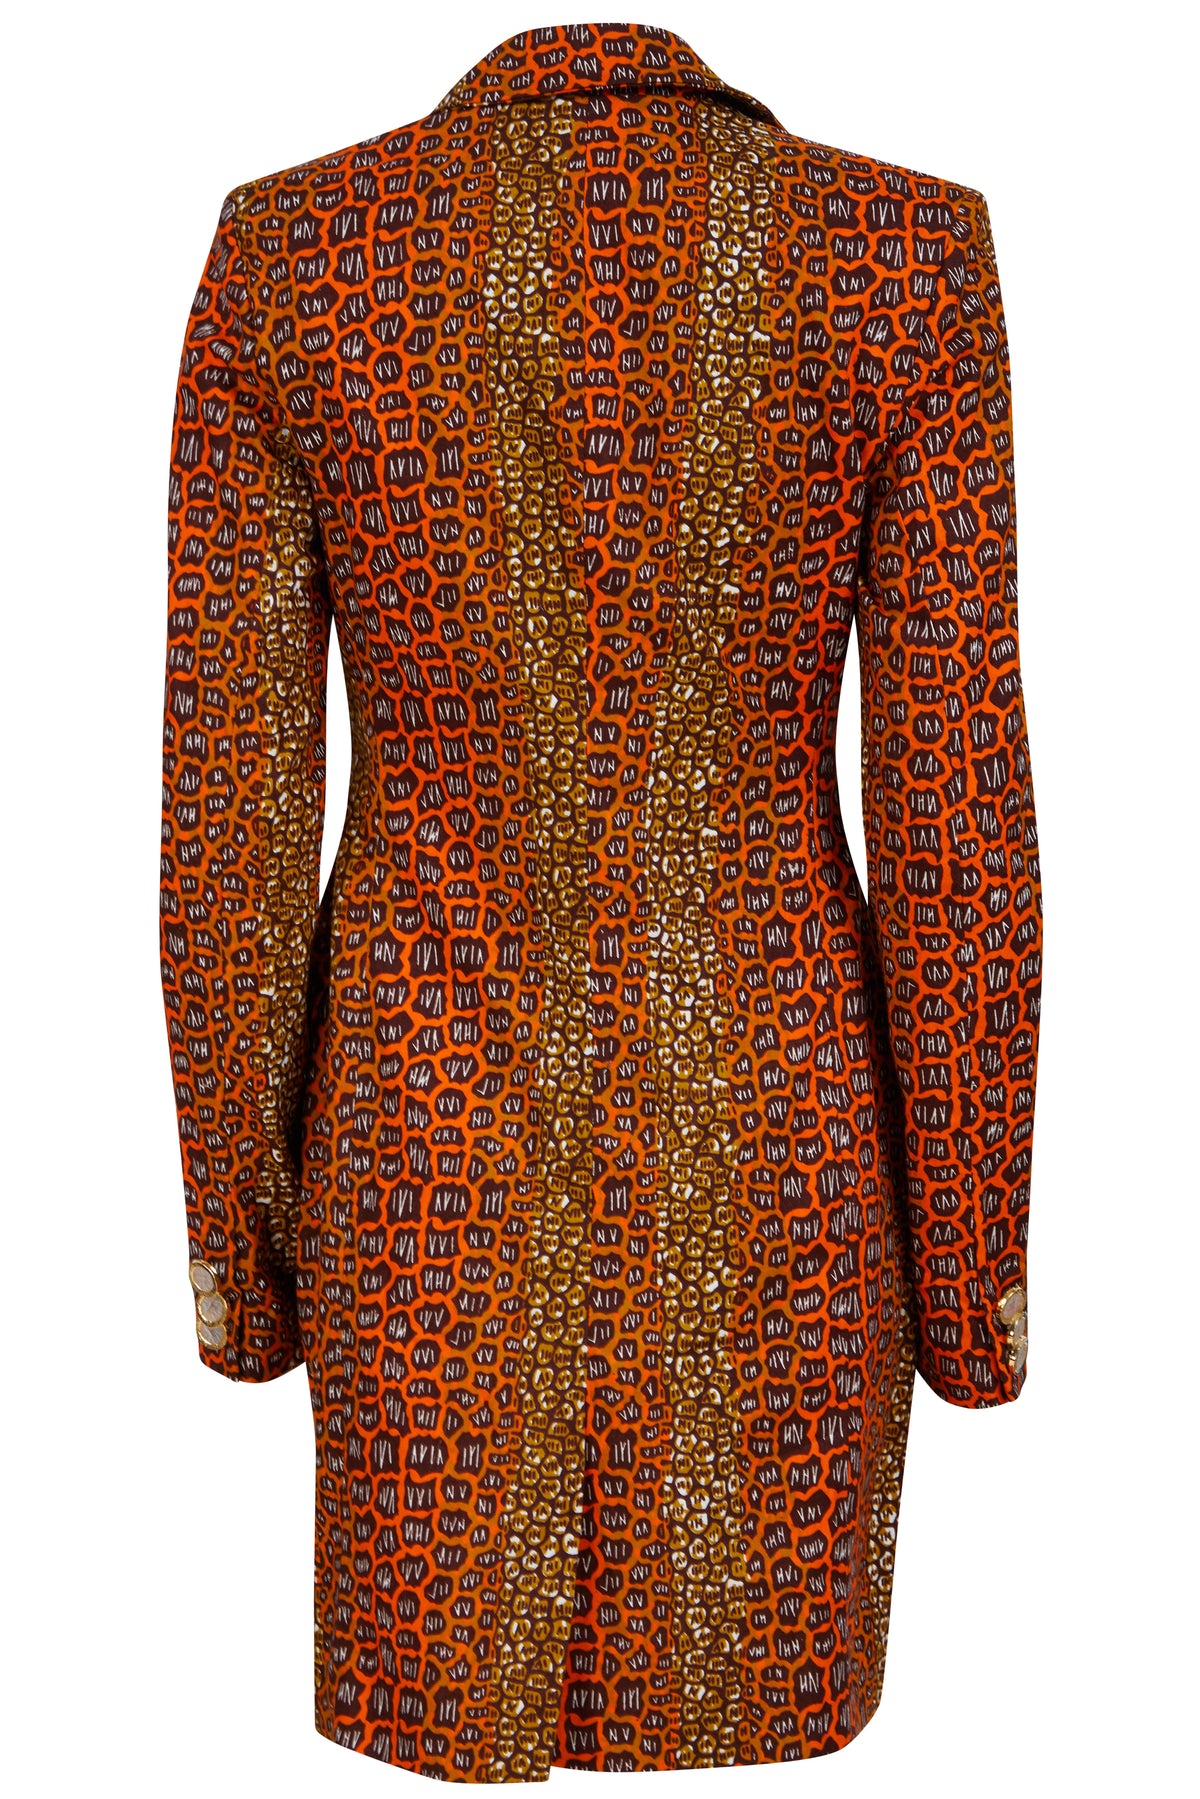 Jacqui African print blazer dress-Flintstone - OHEMA OHENE AFRICAN INSPIRED FASHION